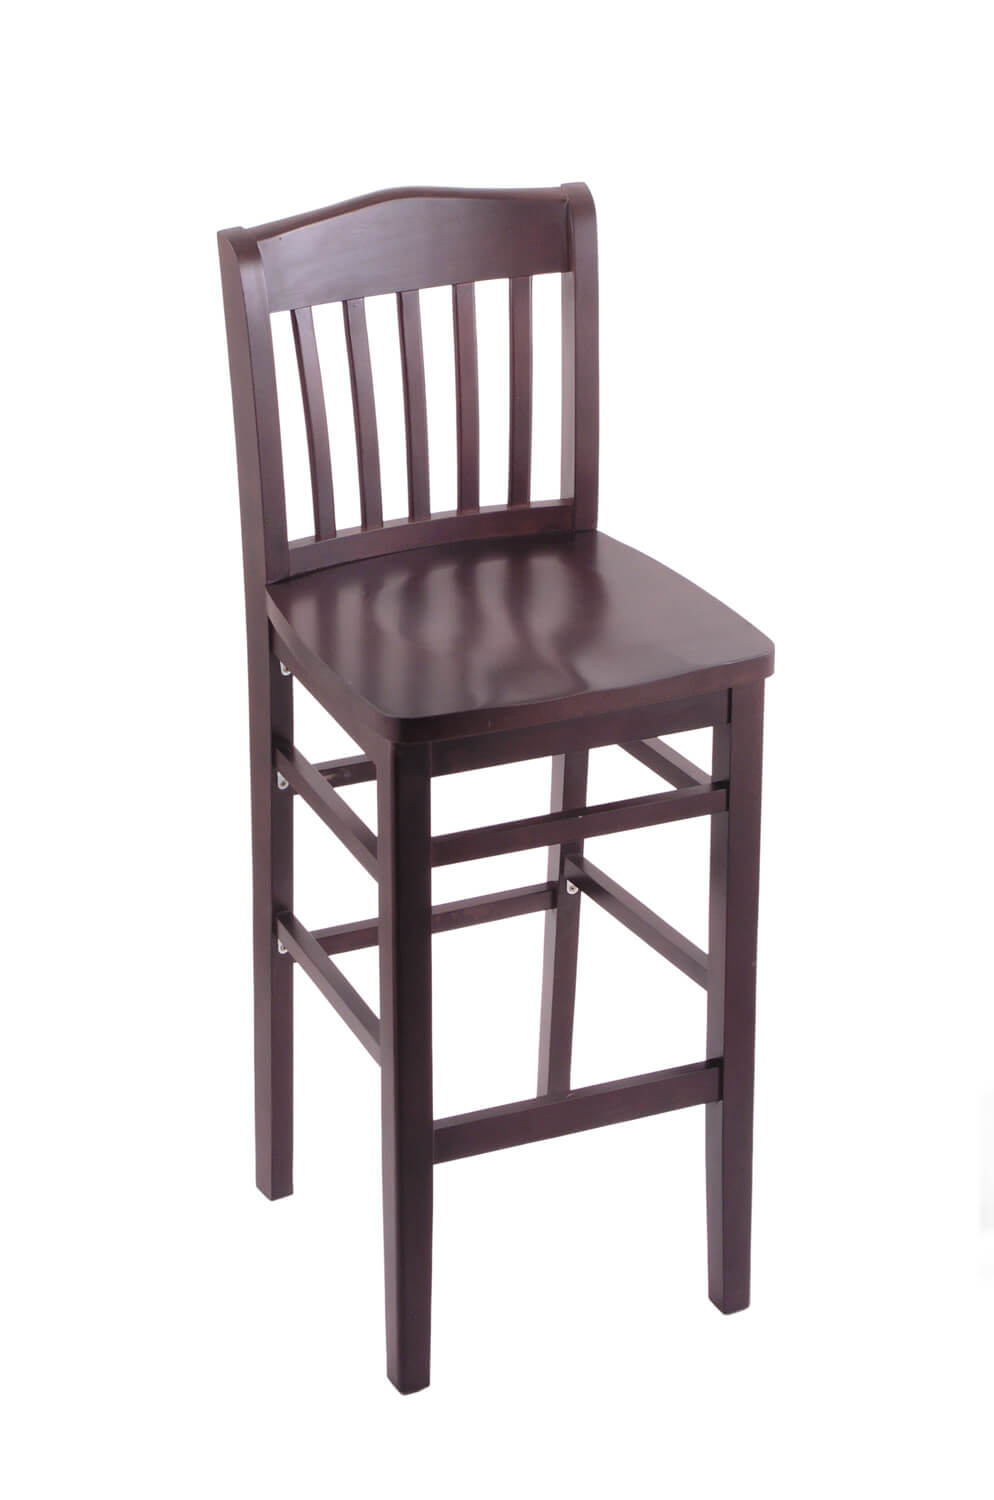 3110 hampton wood stool